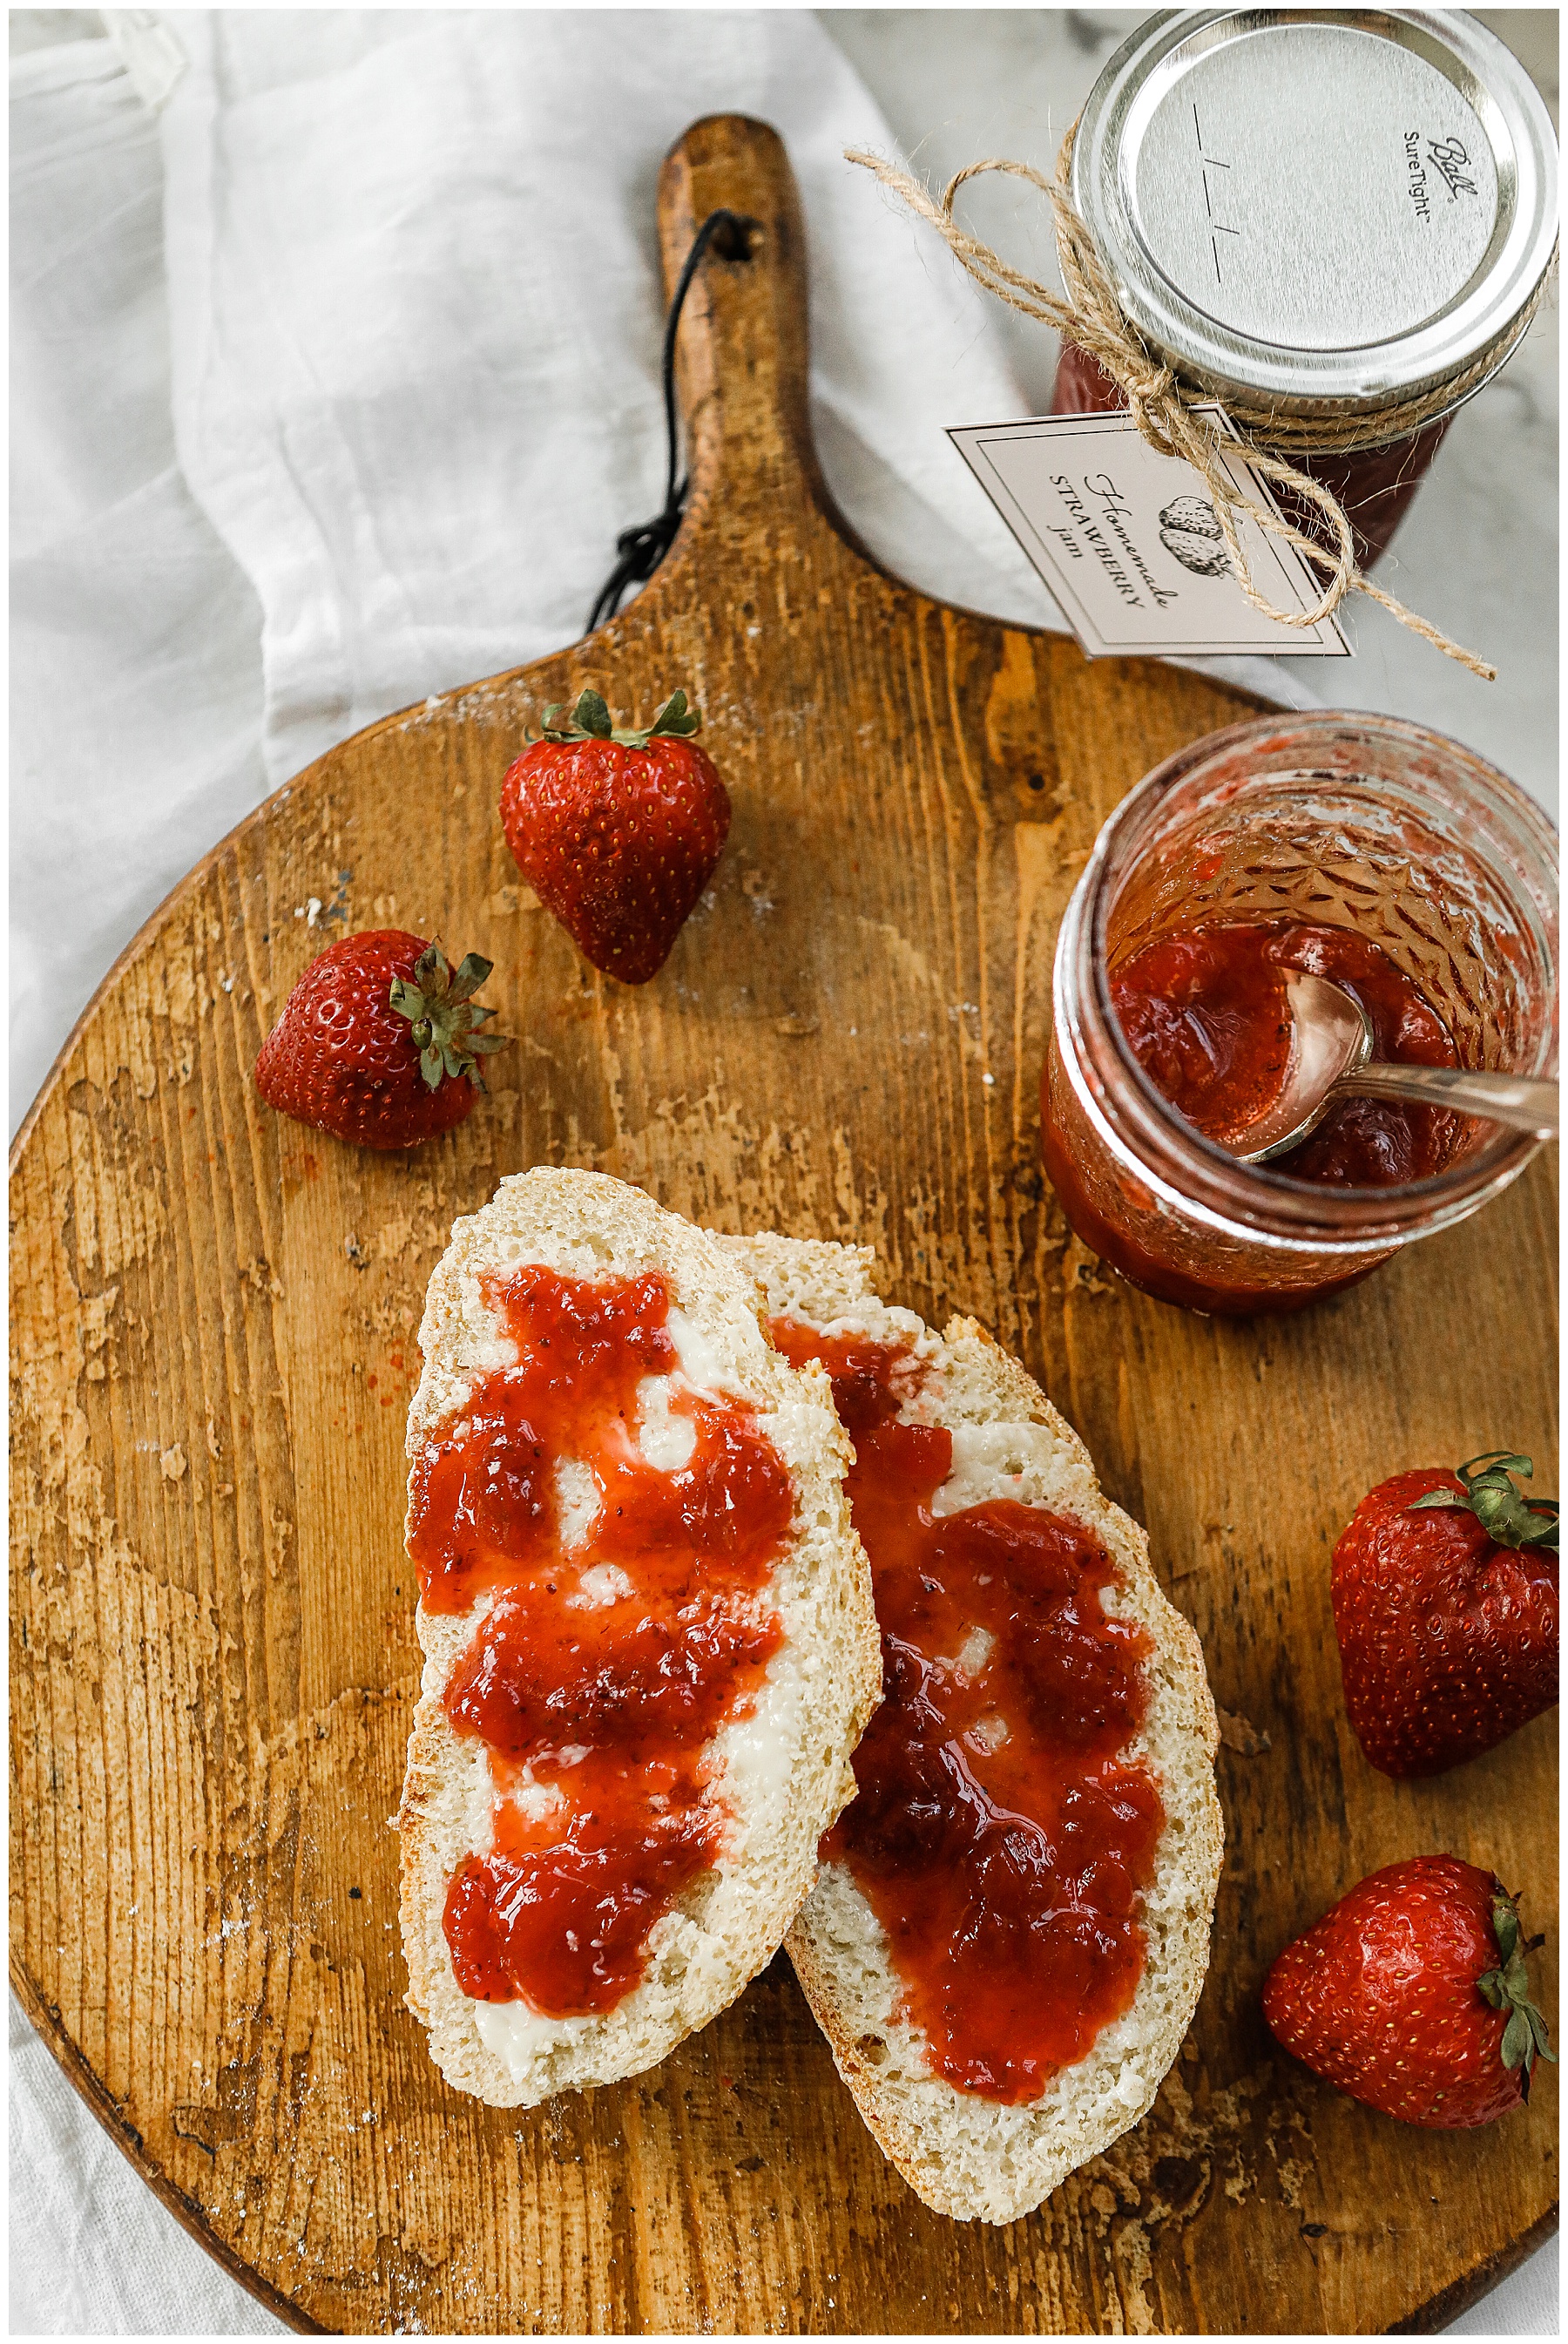 Homemade strawberry jam and bread